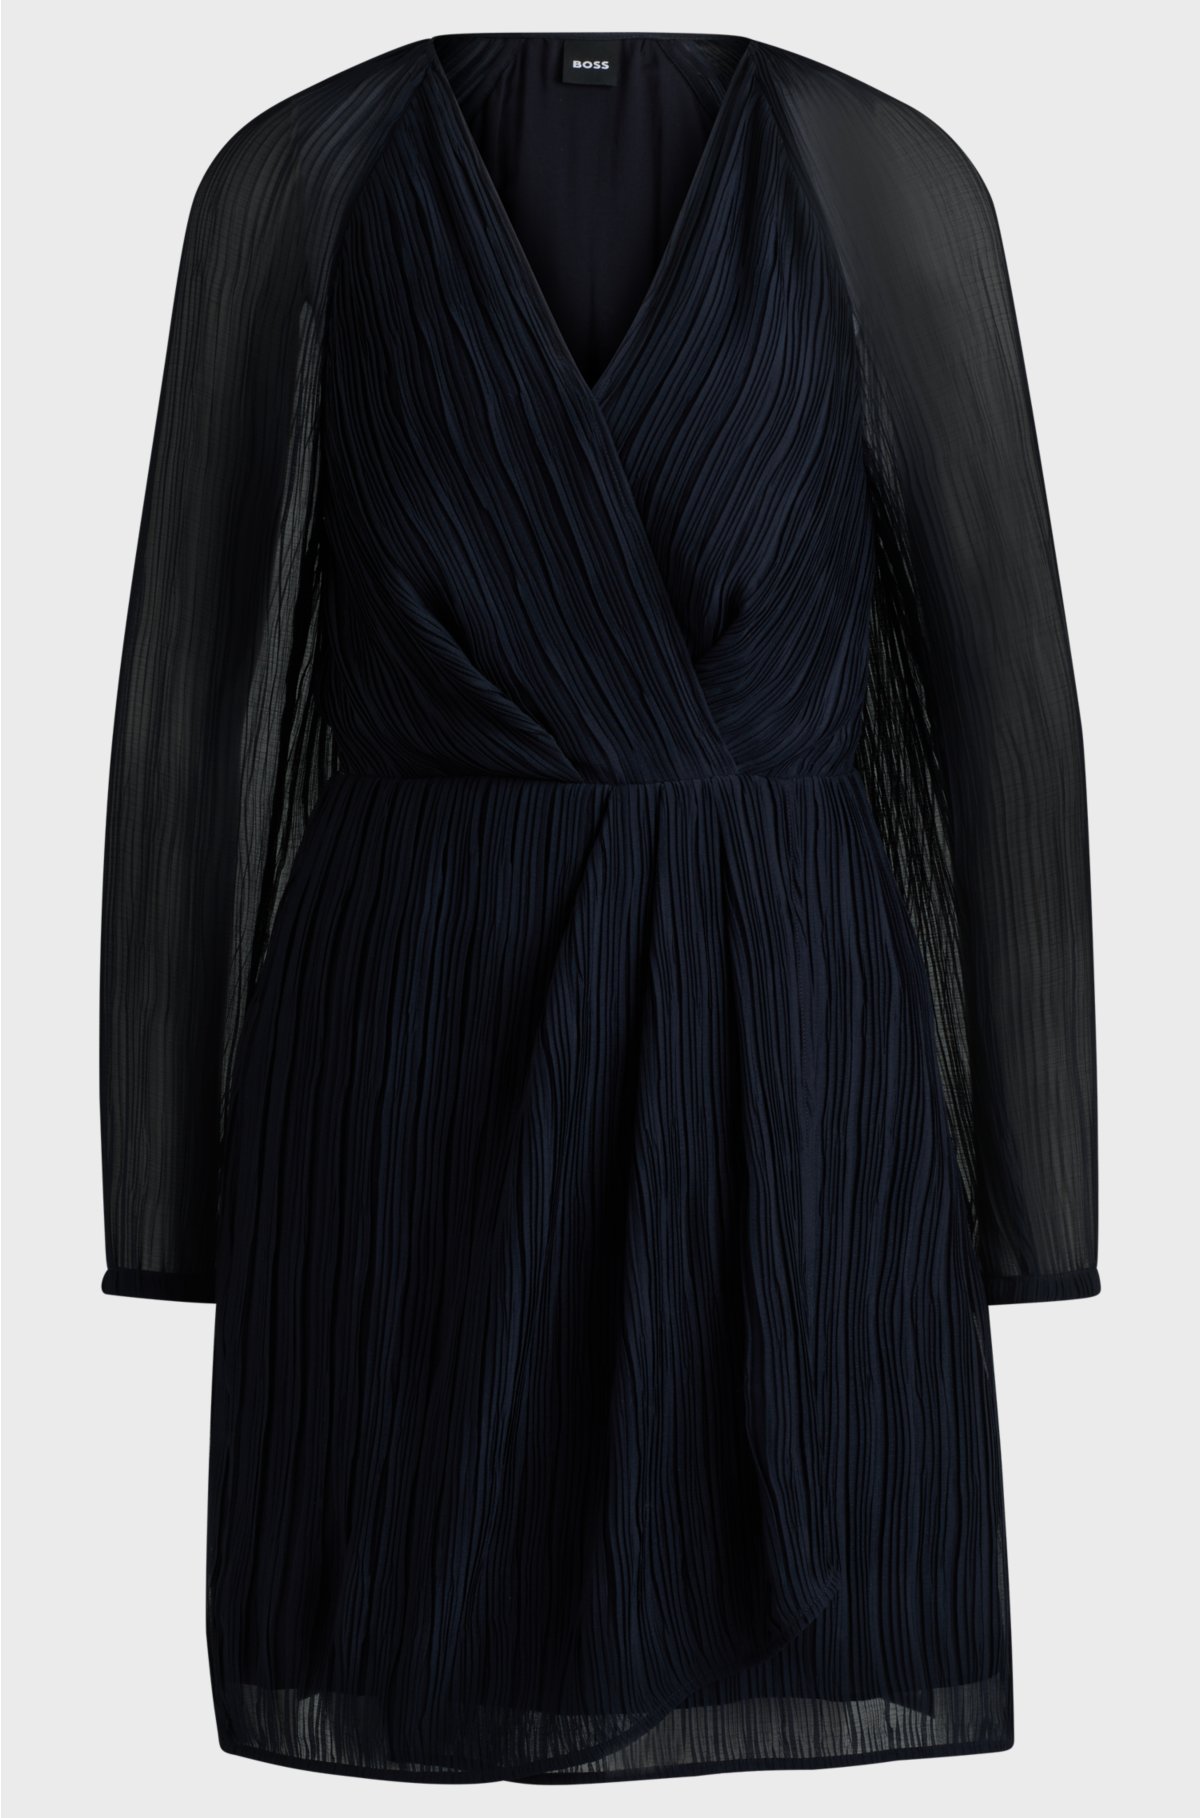 Wrap-front dress with drape details, Dark Blue